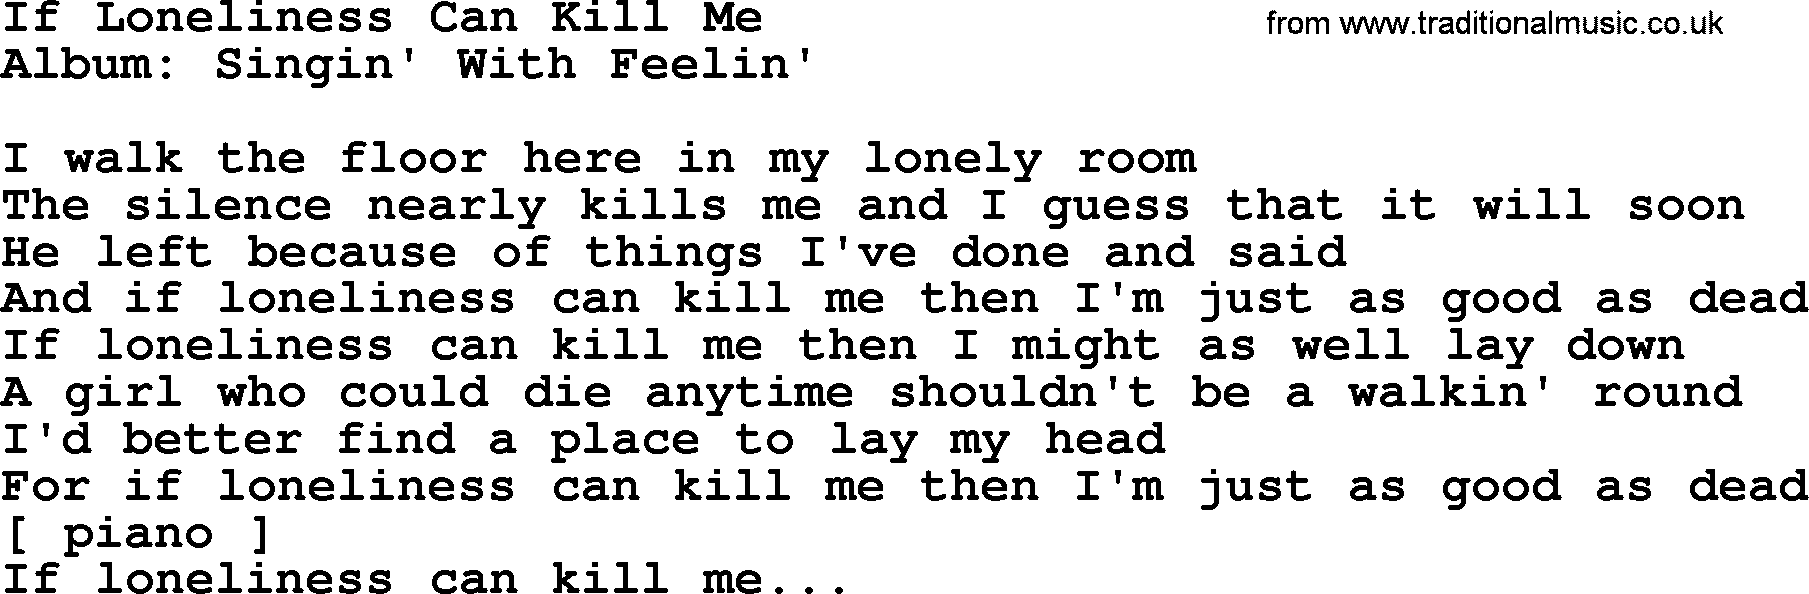 Loretta Lynn song: If Loneliness Can Kill Me lyrics